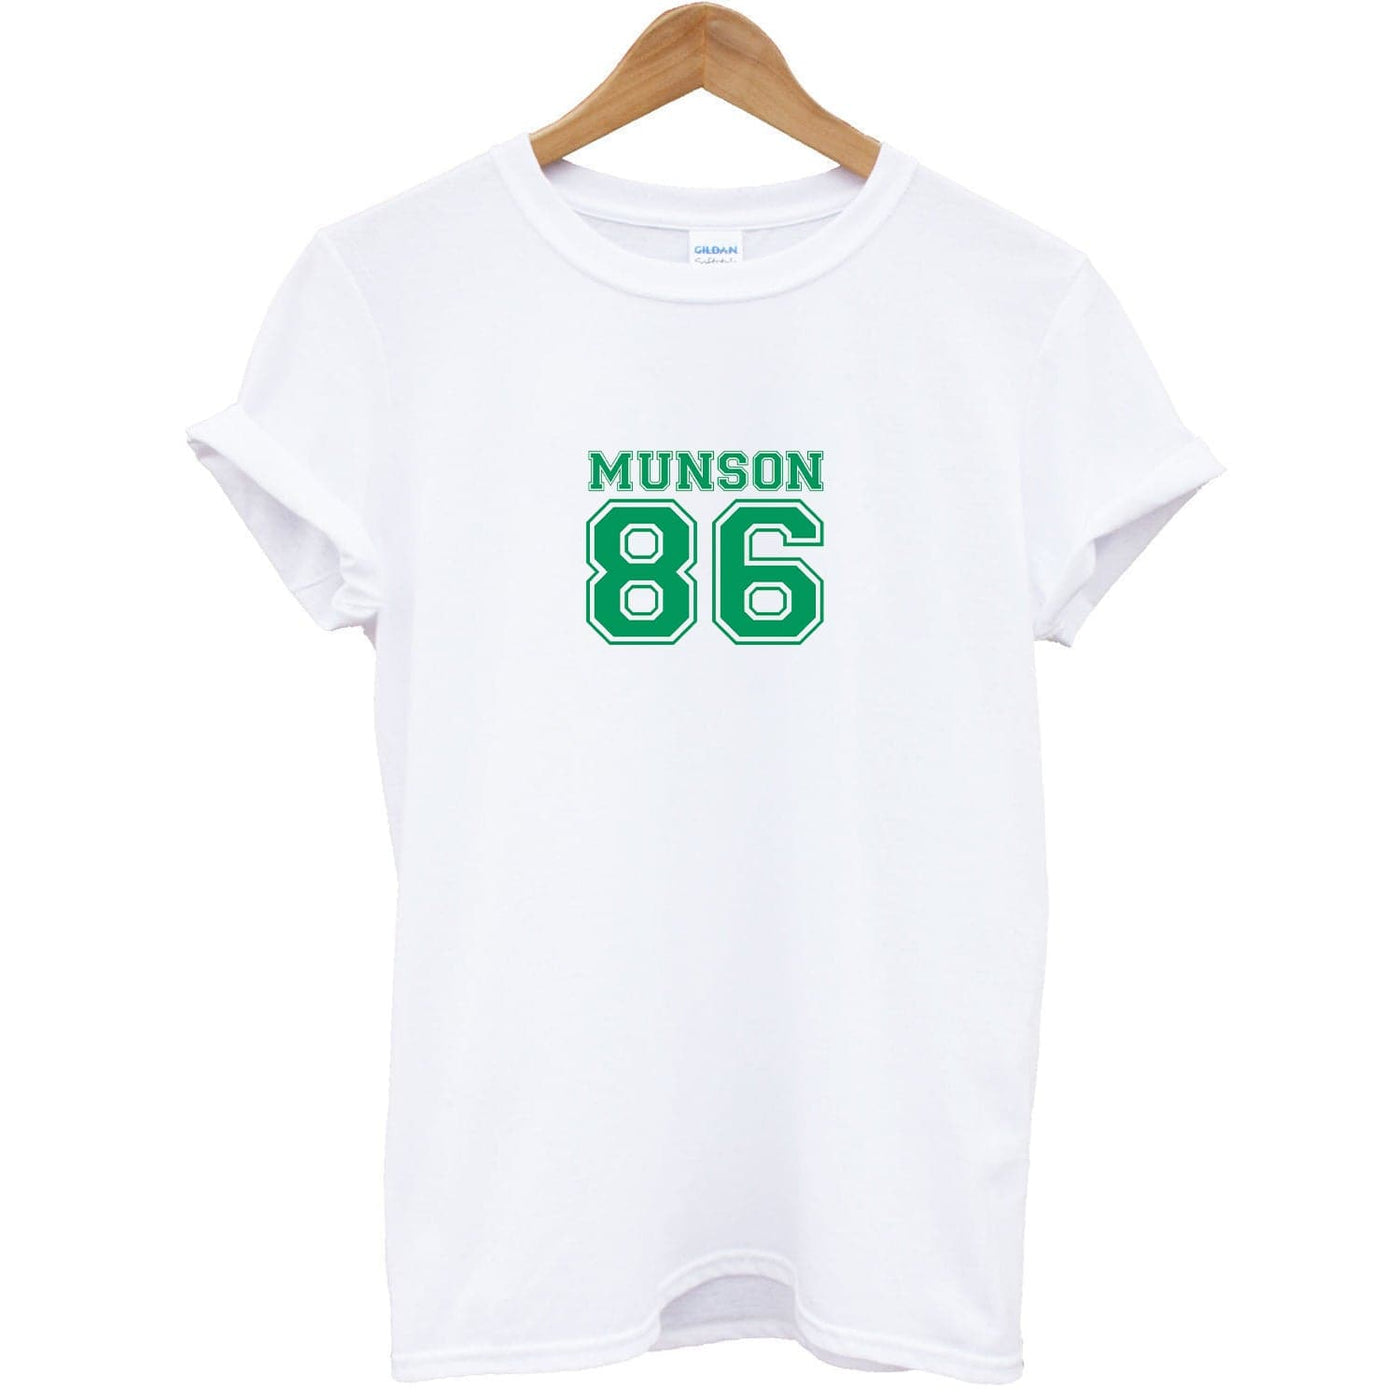 Eddie Munson 86 - Green T-Shirt